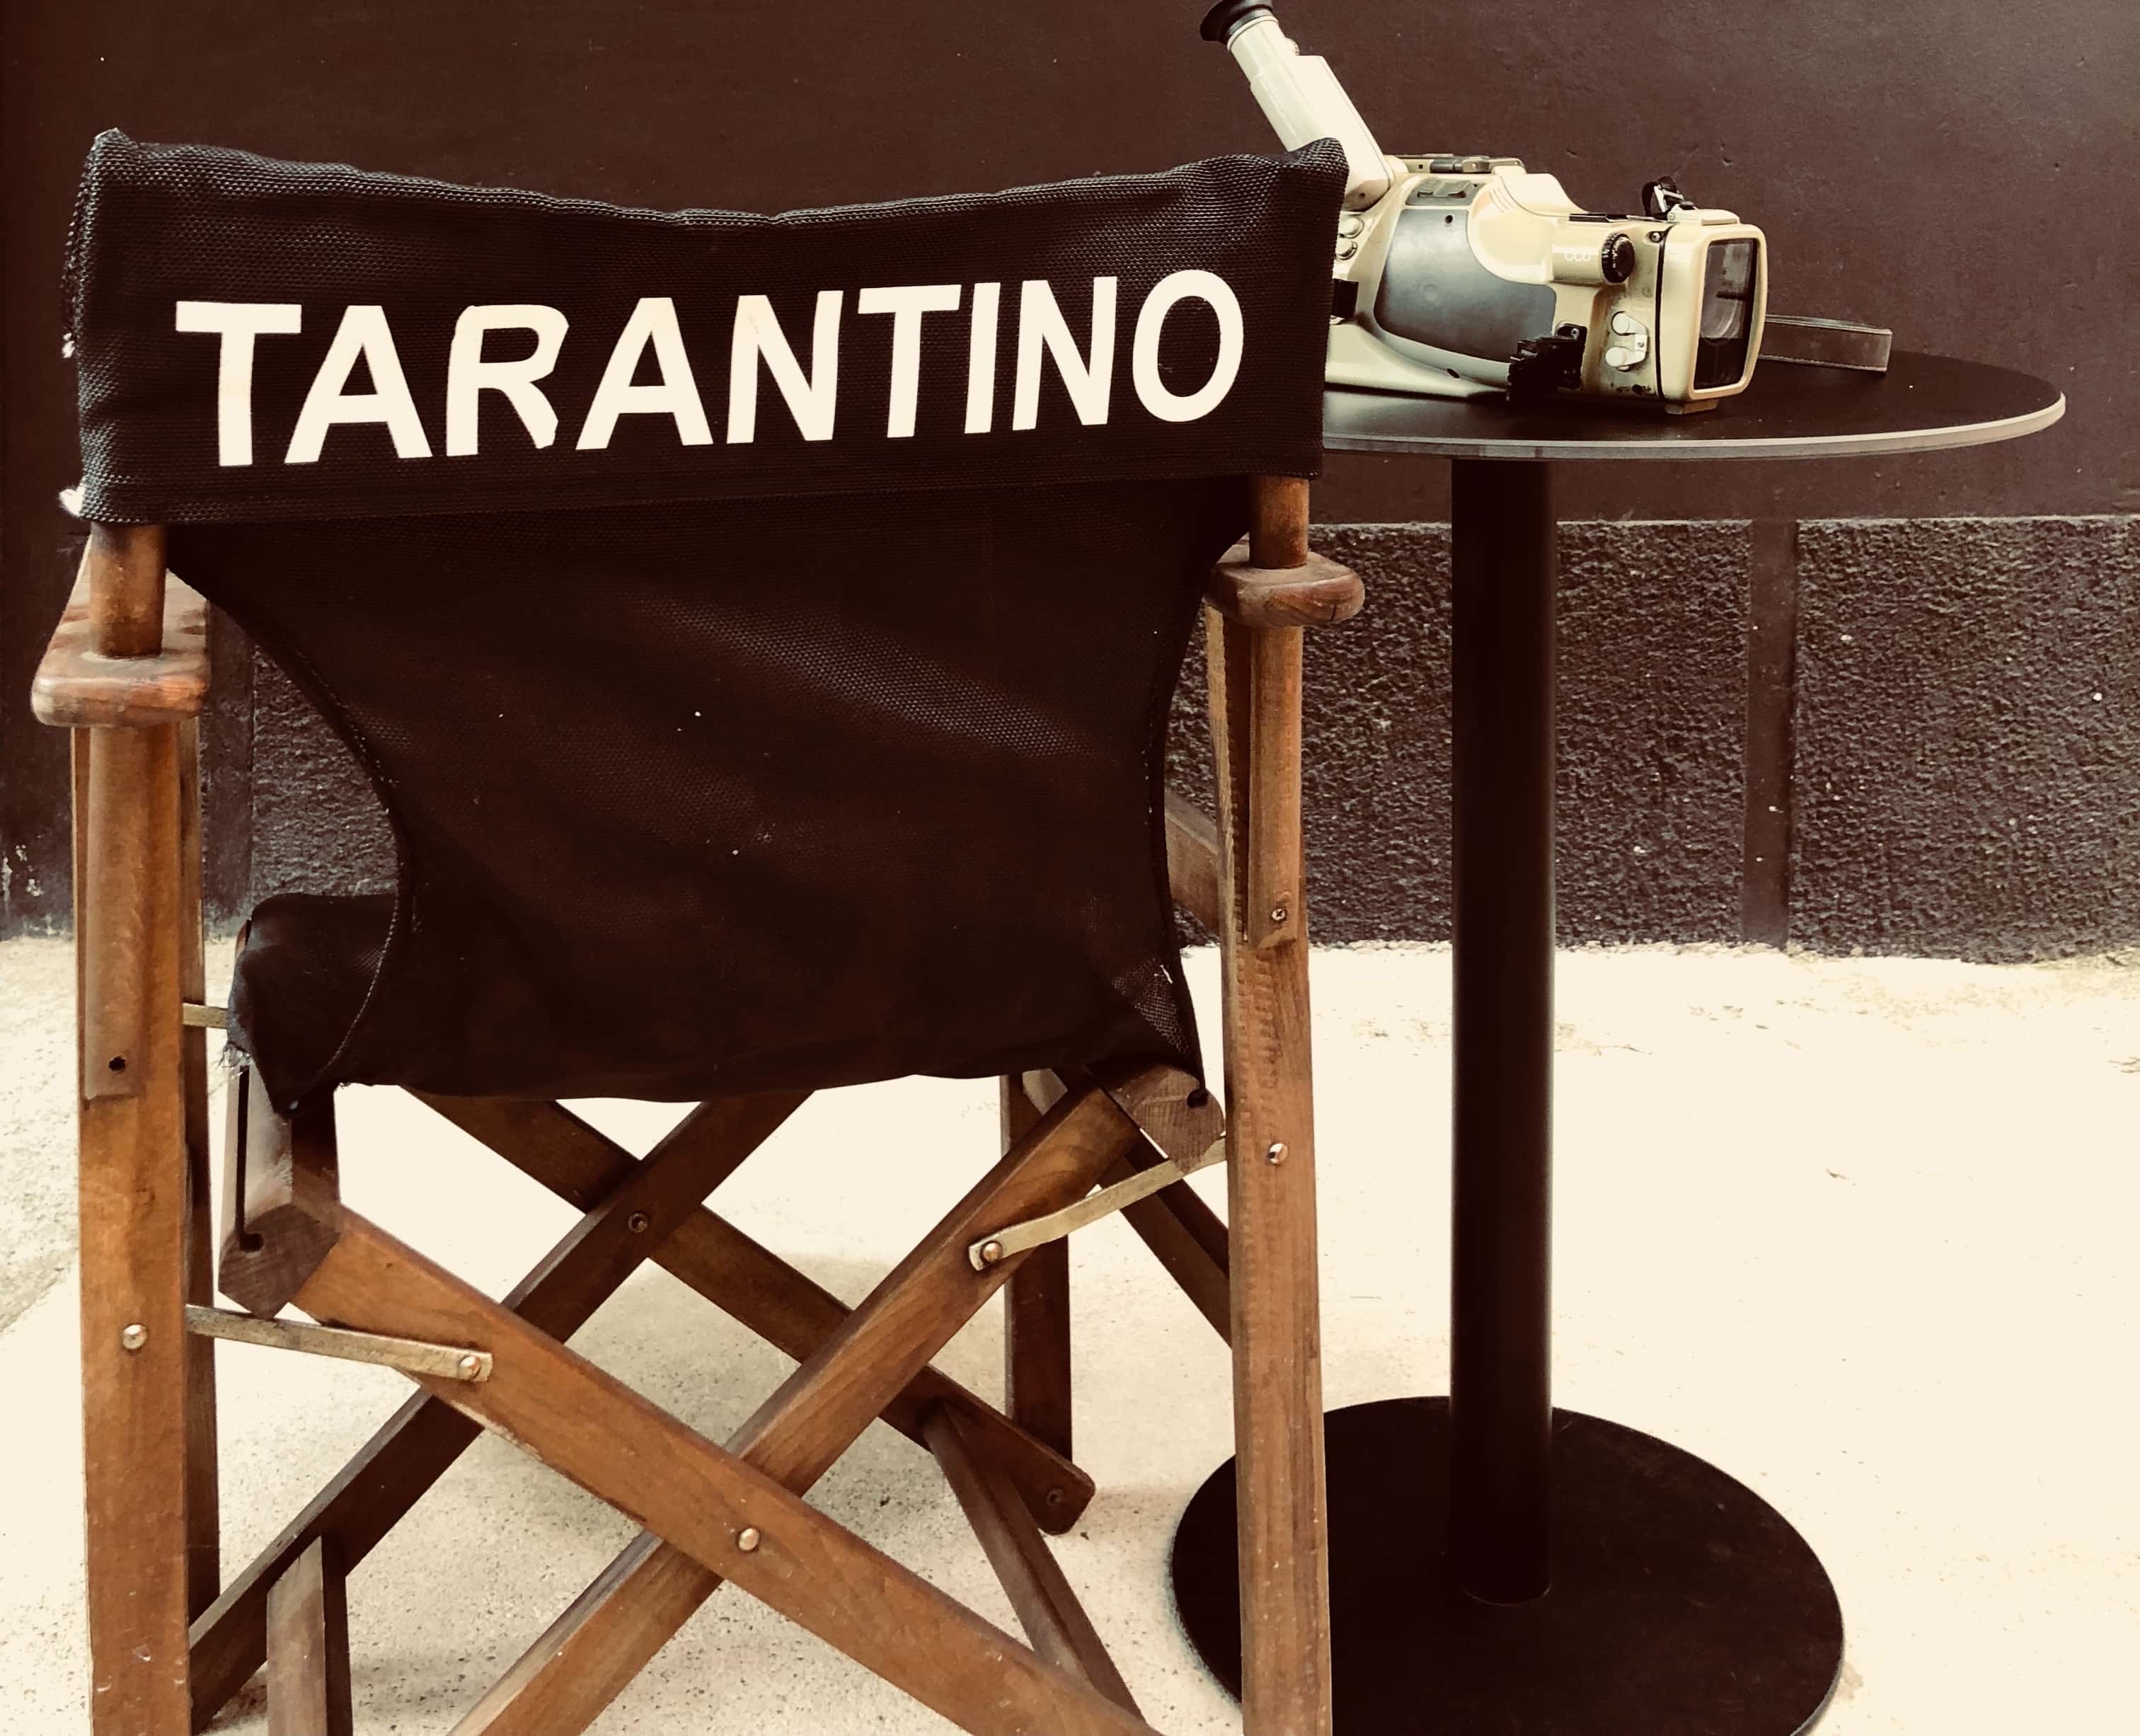 Quentin Tarantino facts